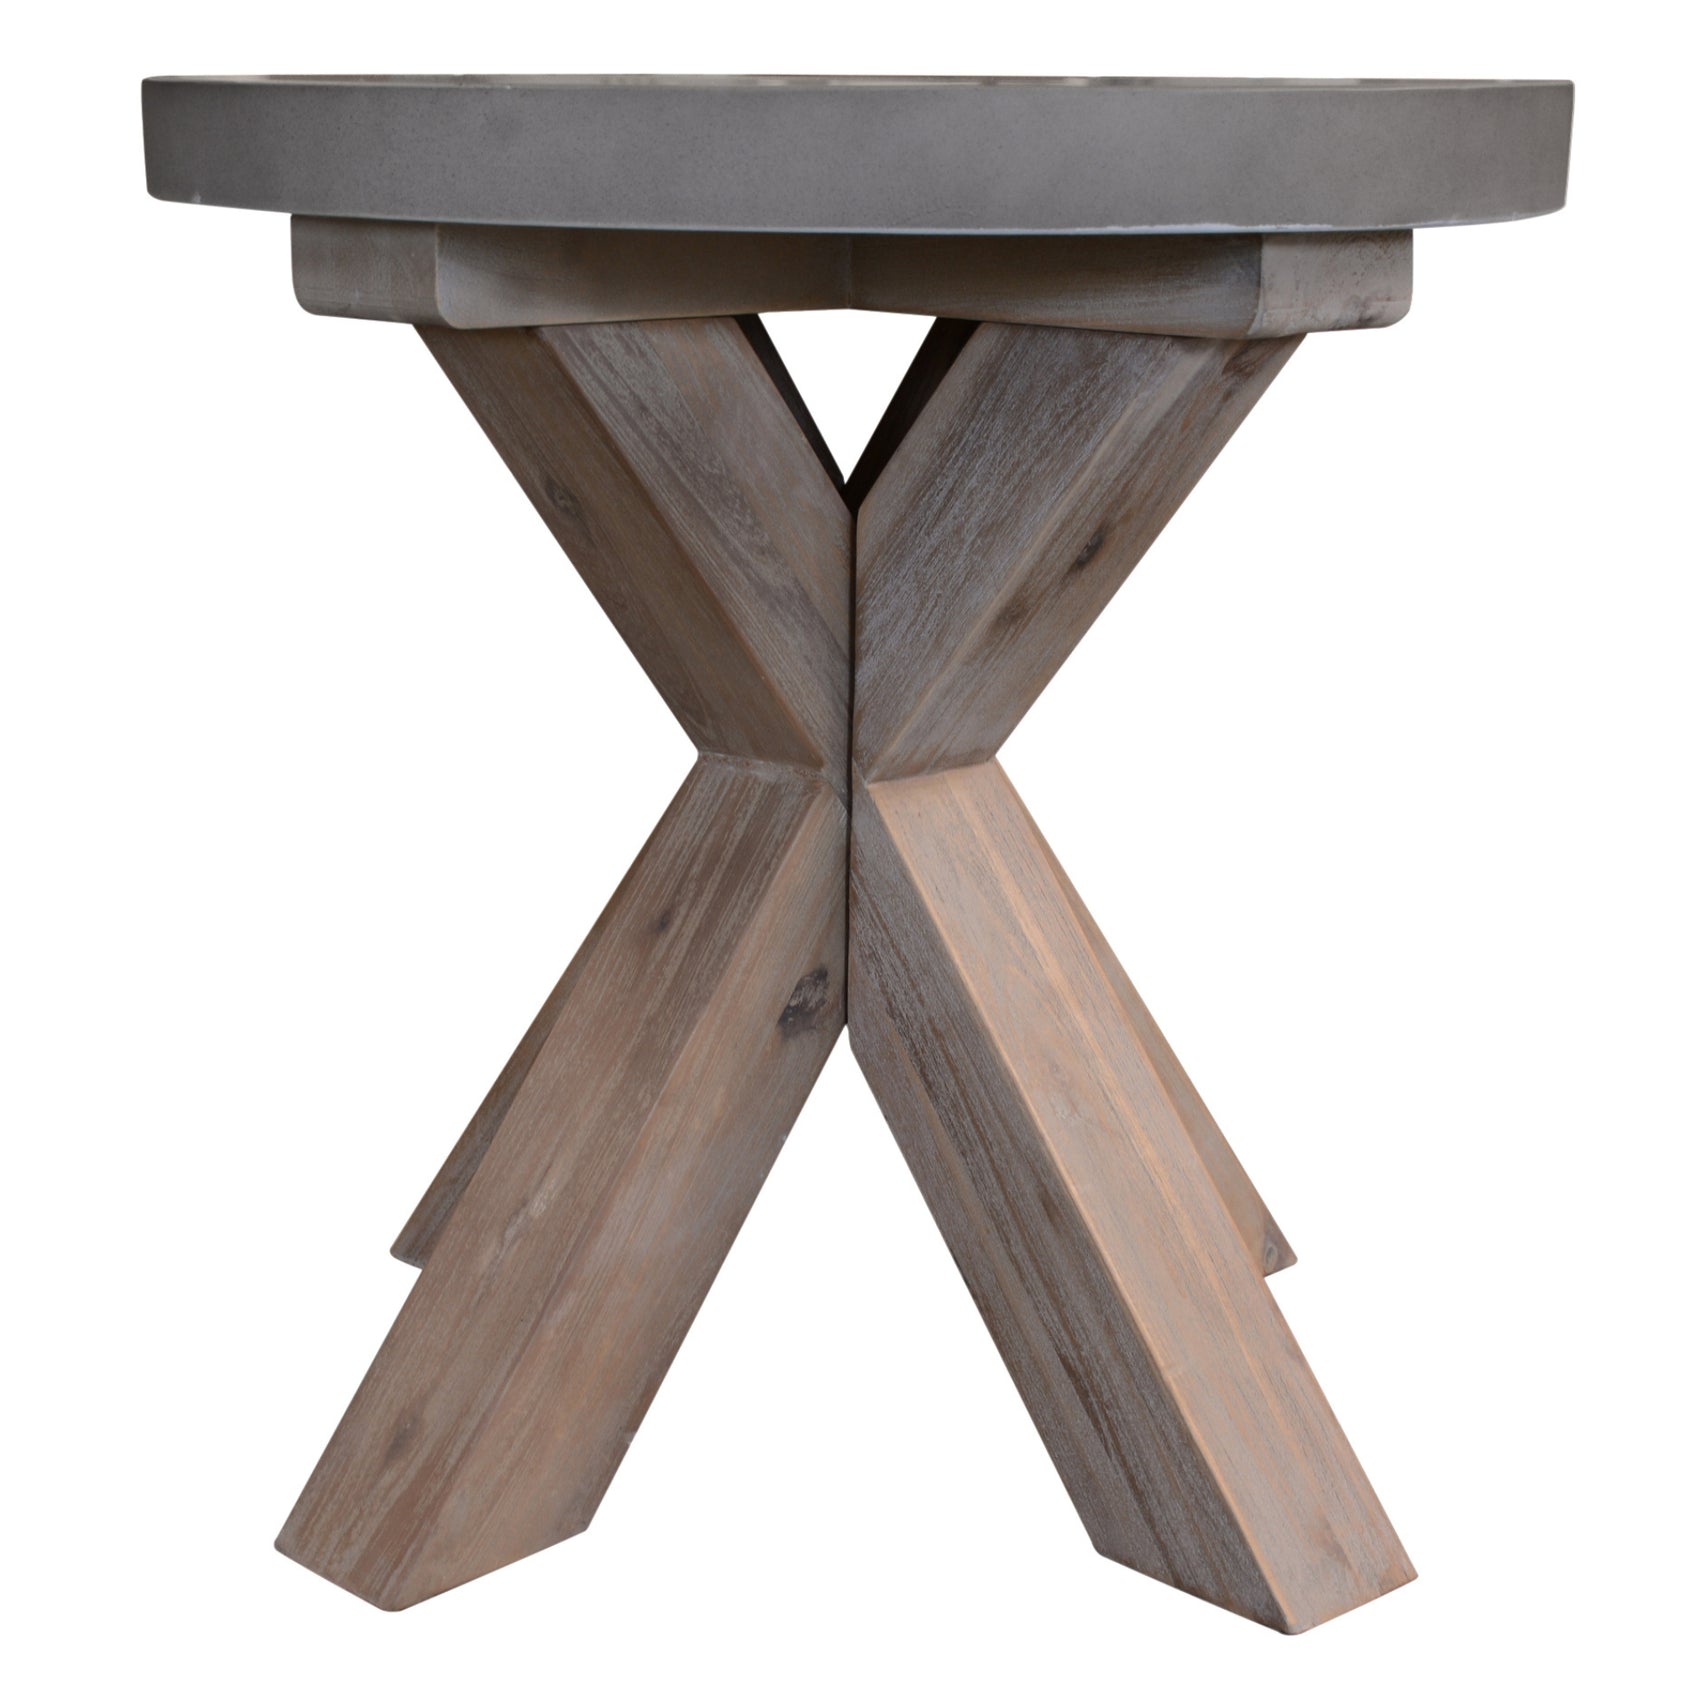 Stony 50cm Round Lamp Table with Concrete Top - Grey